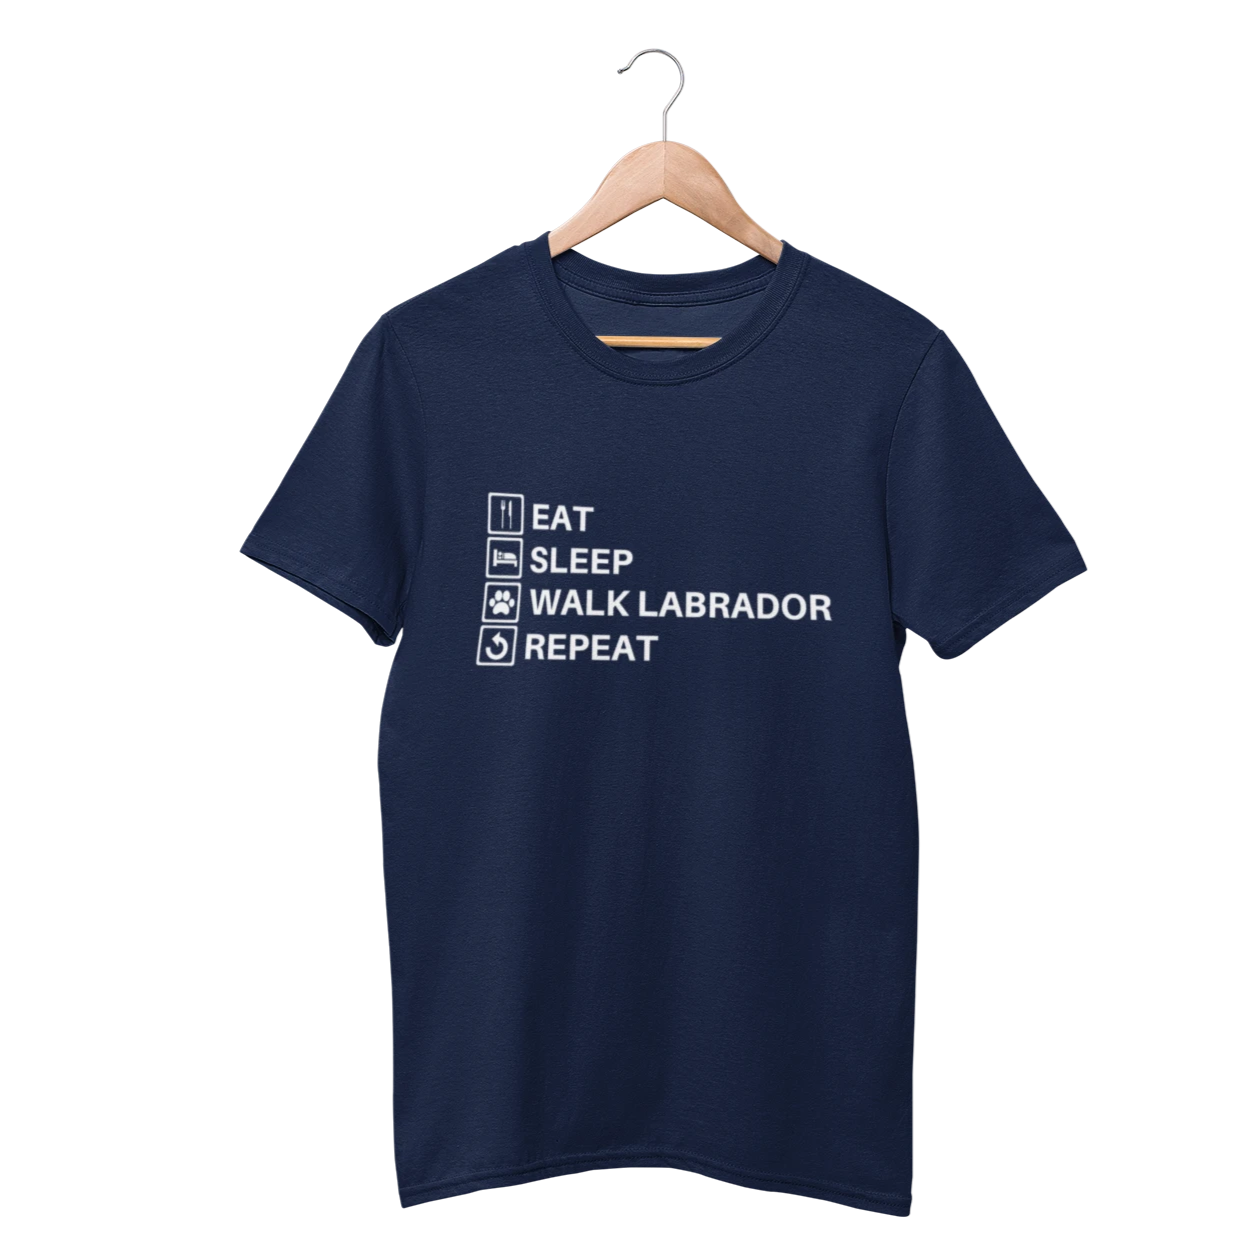 Eat, Sleep, Walk Labrador & Repeat Shirt - Funny Labrador Cute Shirt Labradors Labs